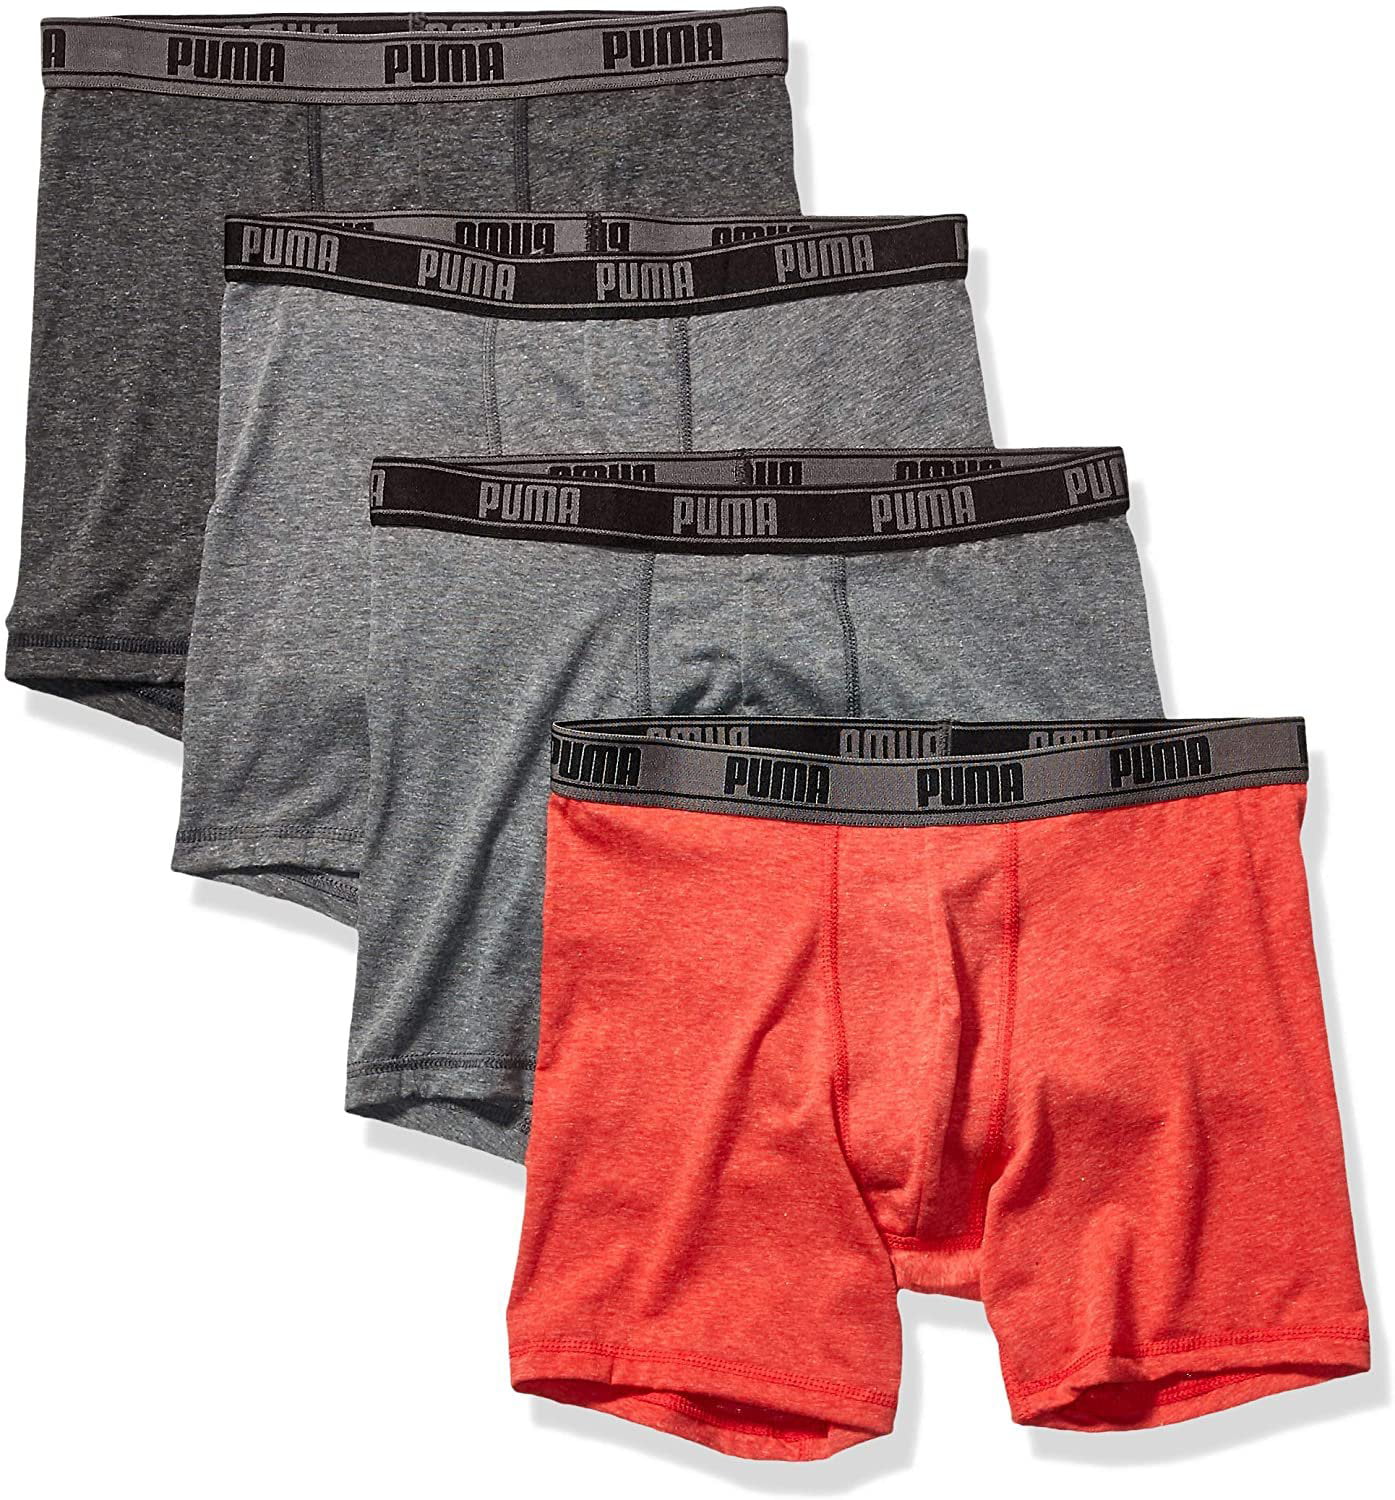 PUMA Men's 4 Pack Tech Boxer Brief, Red/Grey, Medium - Walmart.com